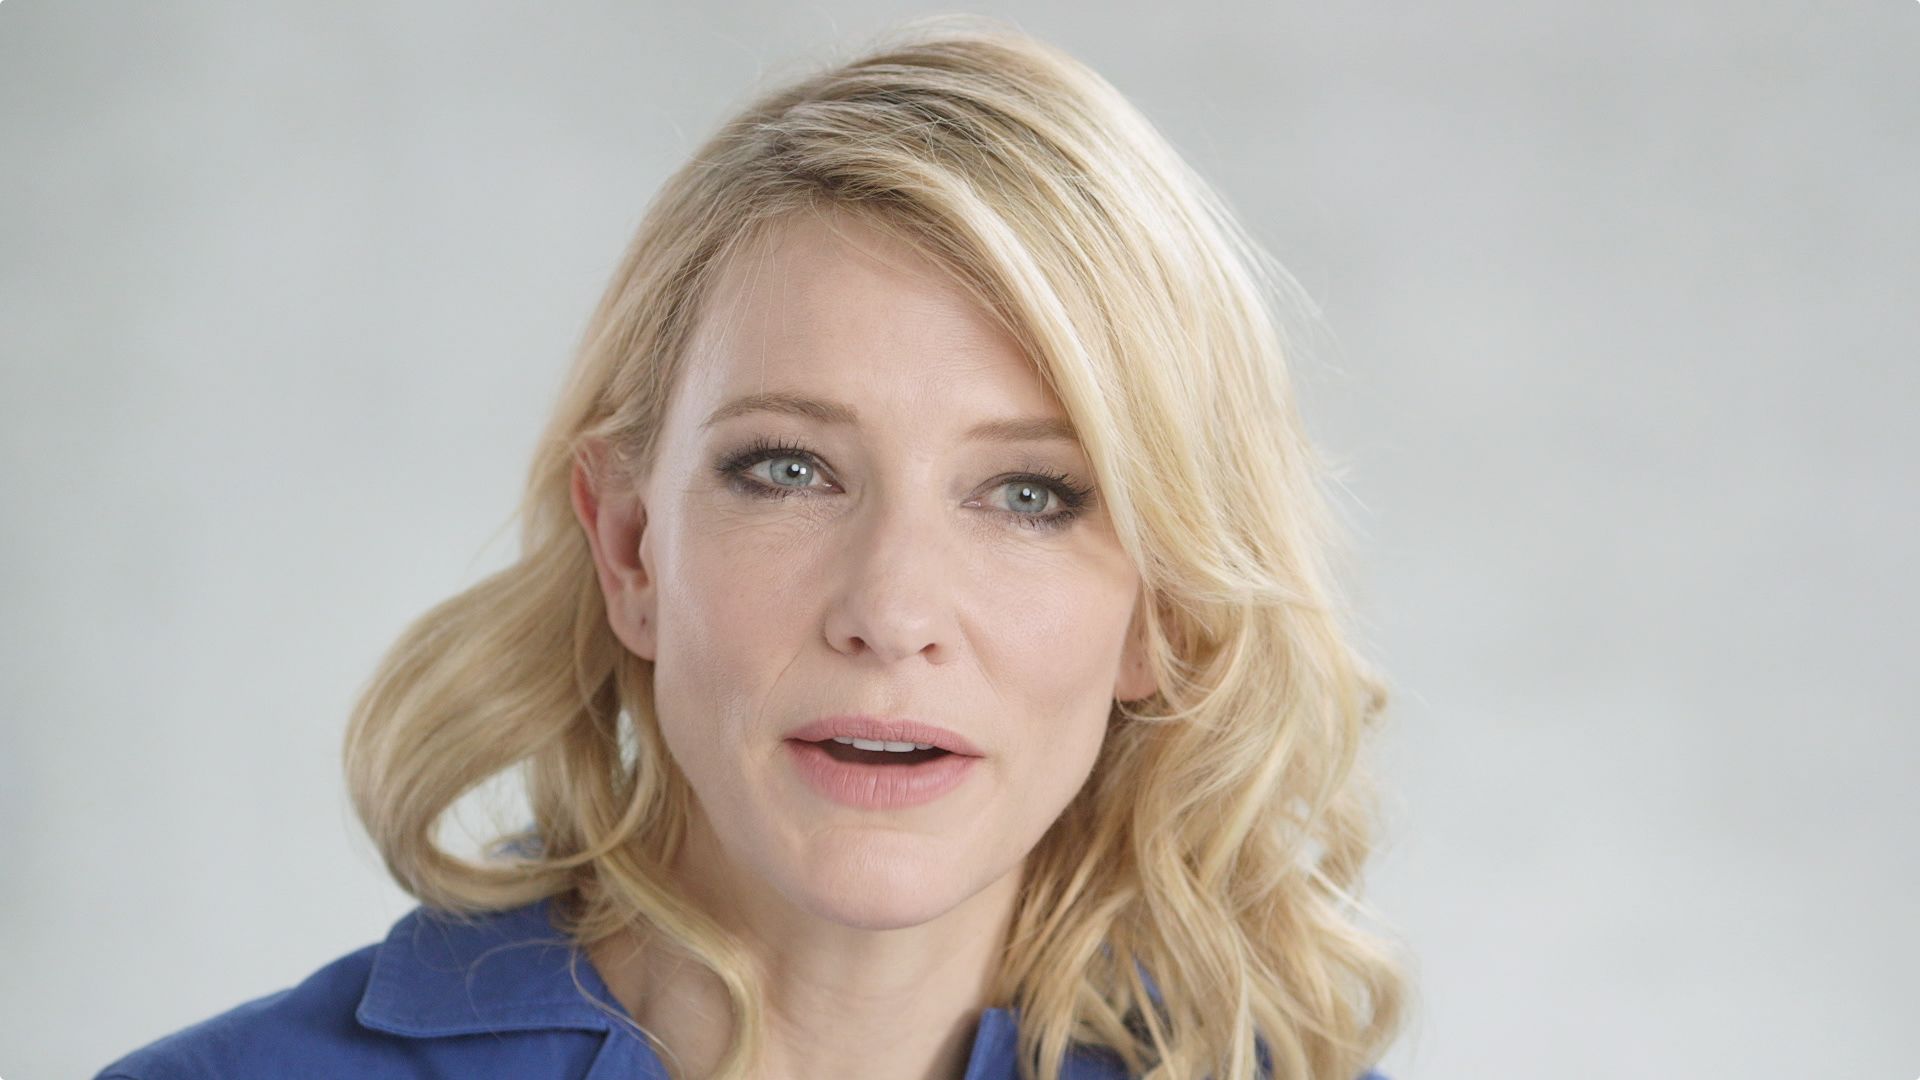 Watch Cate Blanchett on the Female Gaze In “Carol”